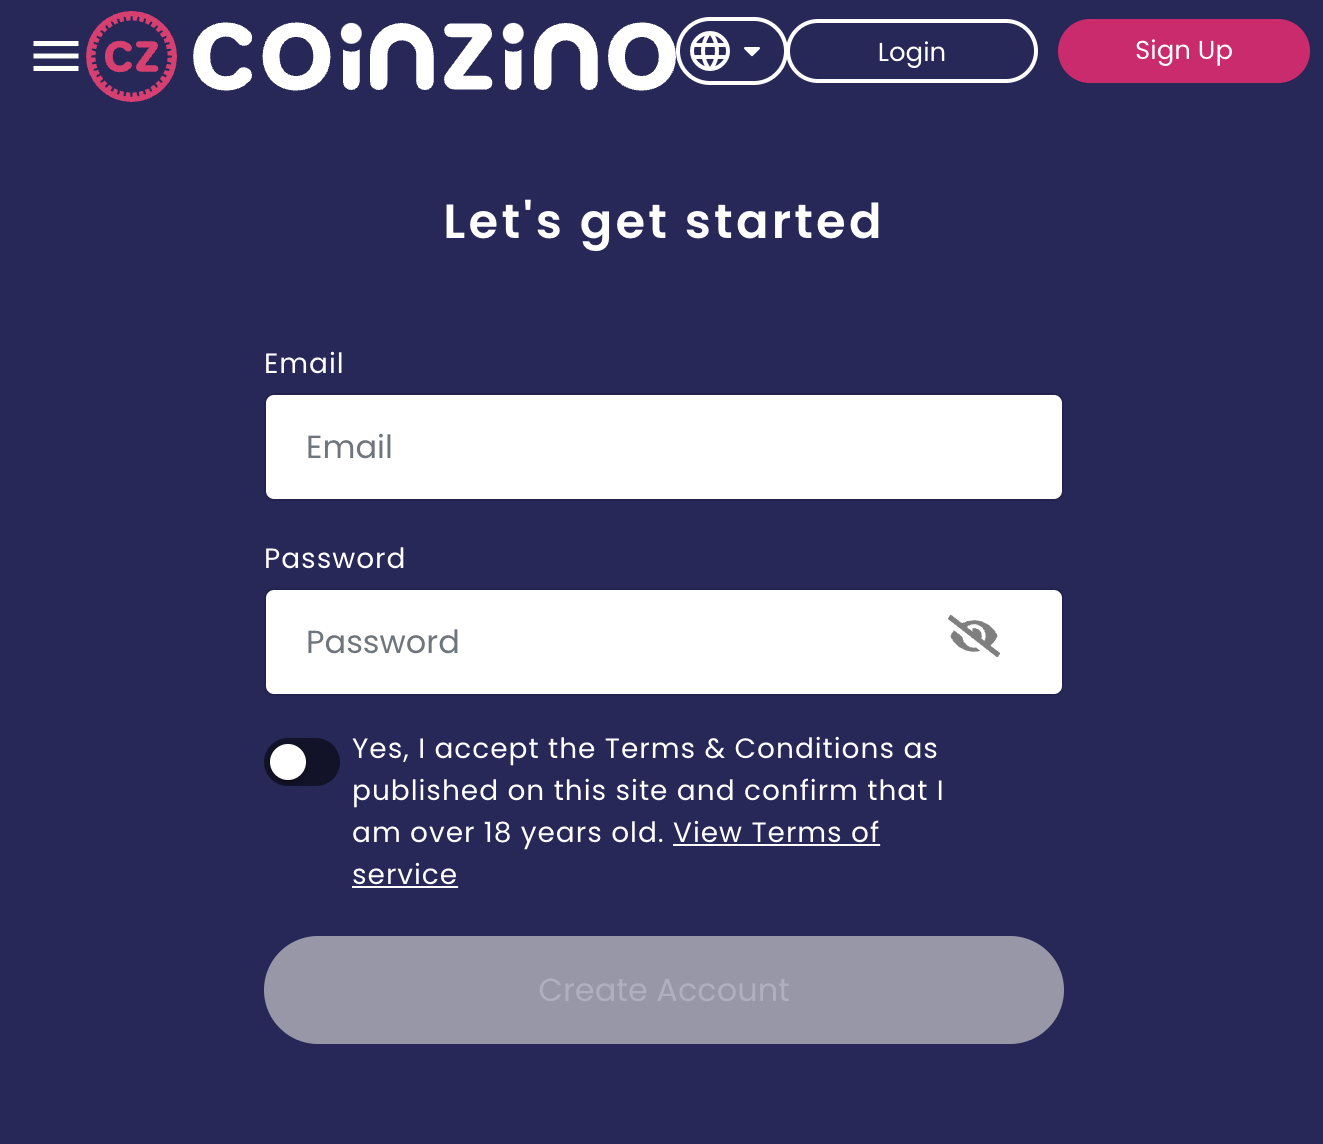 Create an account on Coinzino